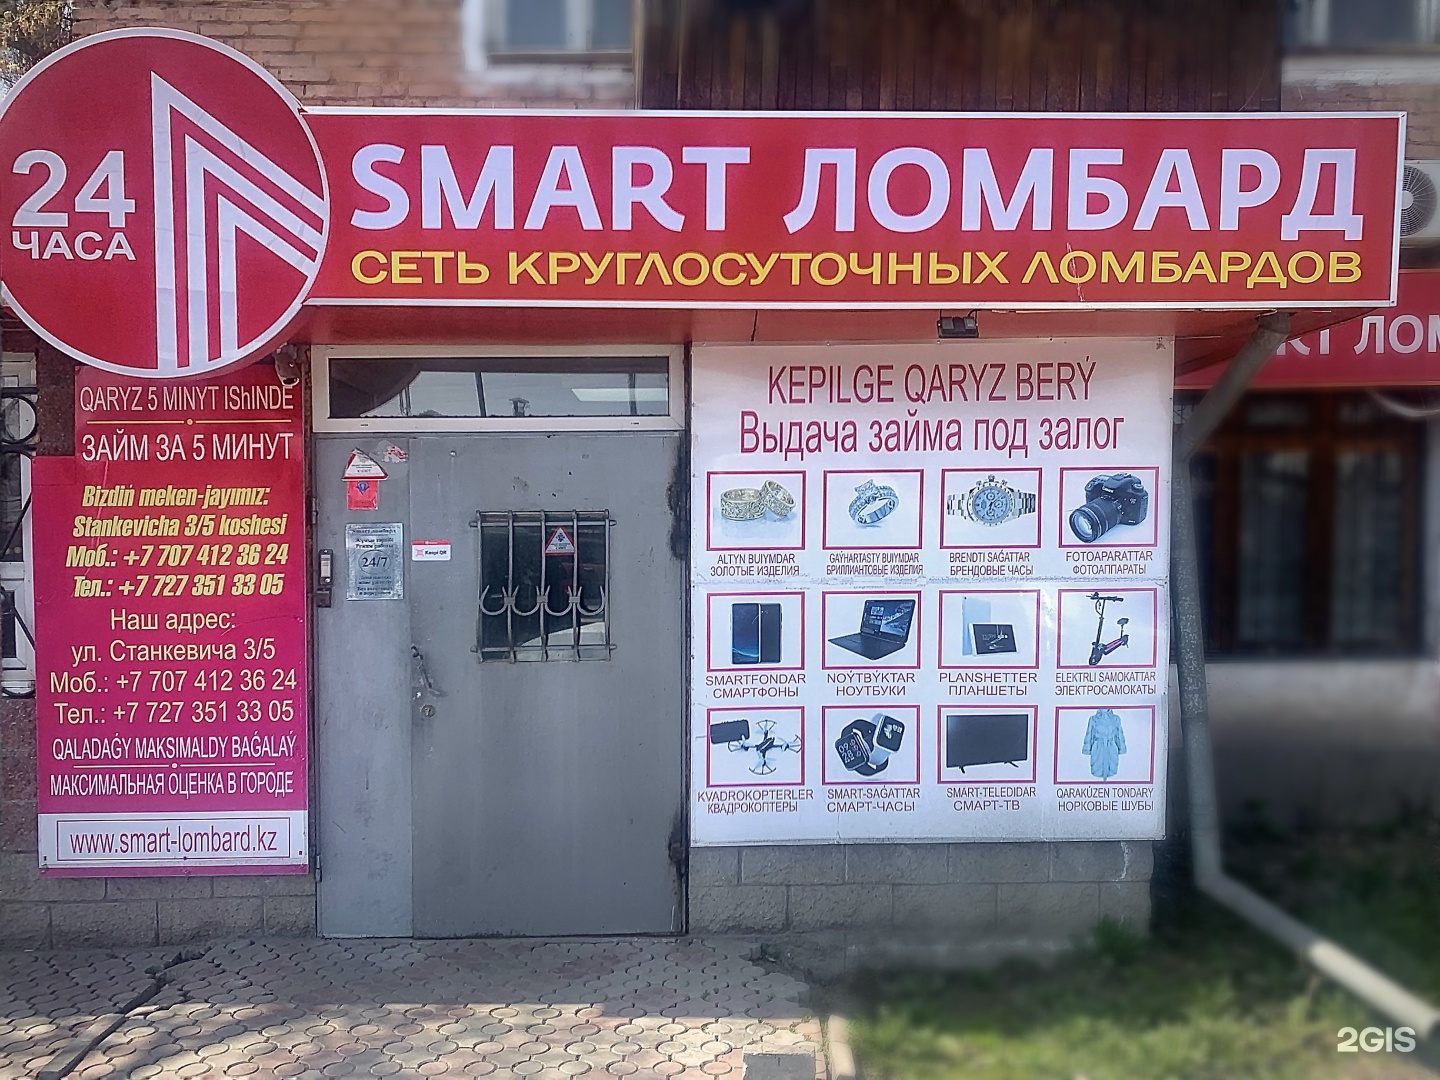 Круглосуточный ломбард телефон. Smart ломбард. Ломбард в Кызыле. Ломбард реклама. Круглосуточный ломбард техники.